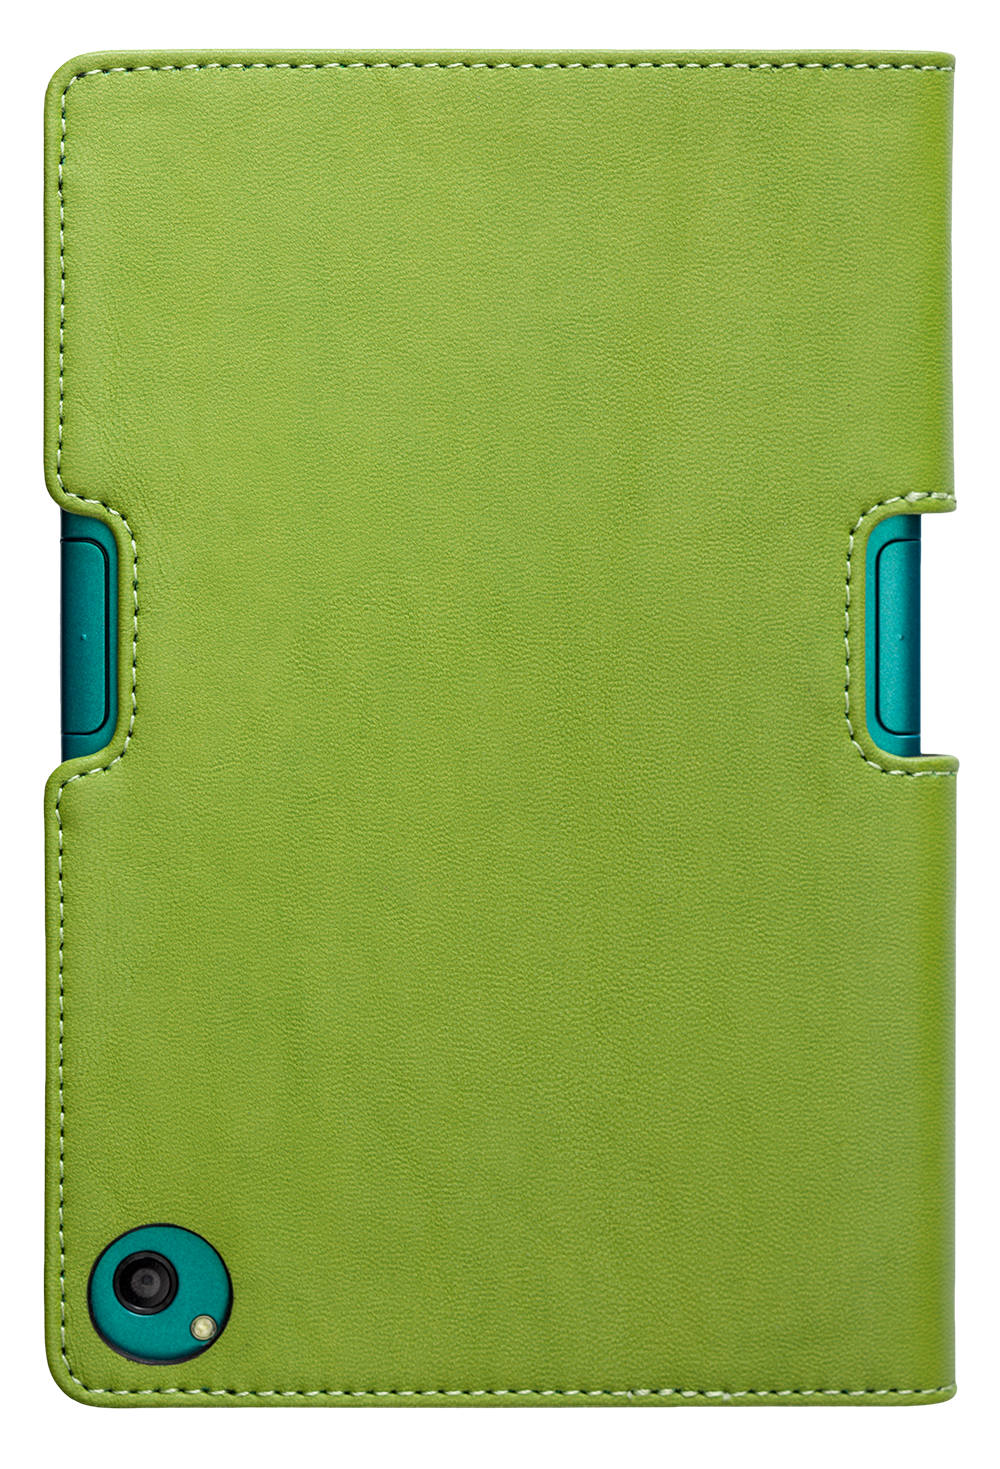 PocketBook Magneto Cover voor Ultra, groen (PBPCC-650-MG-GR)